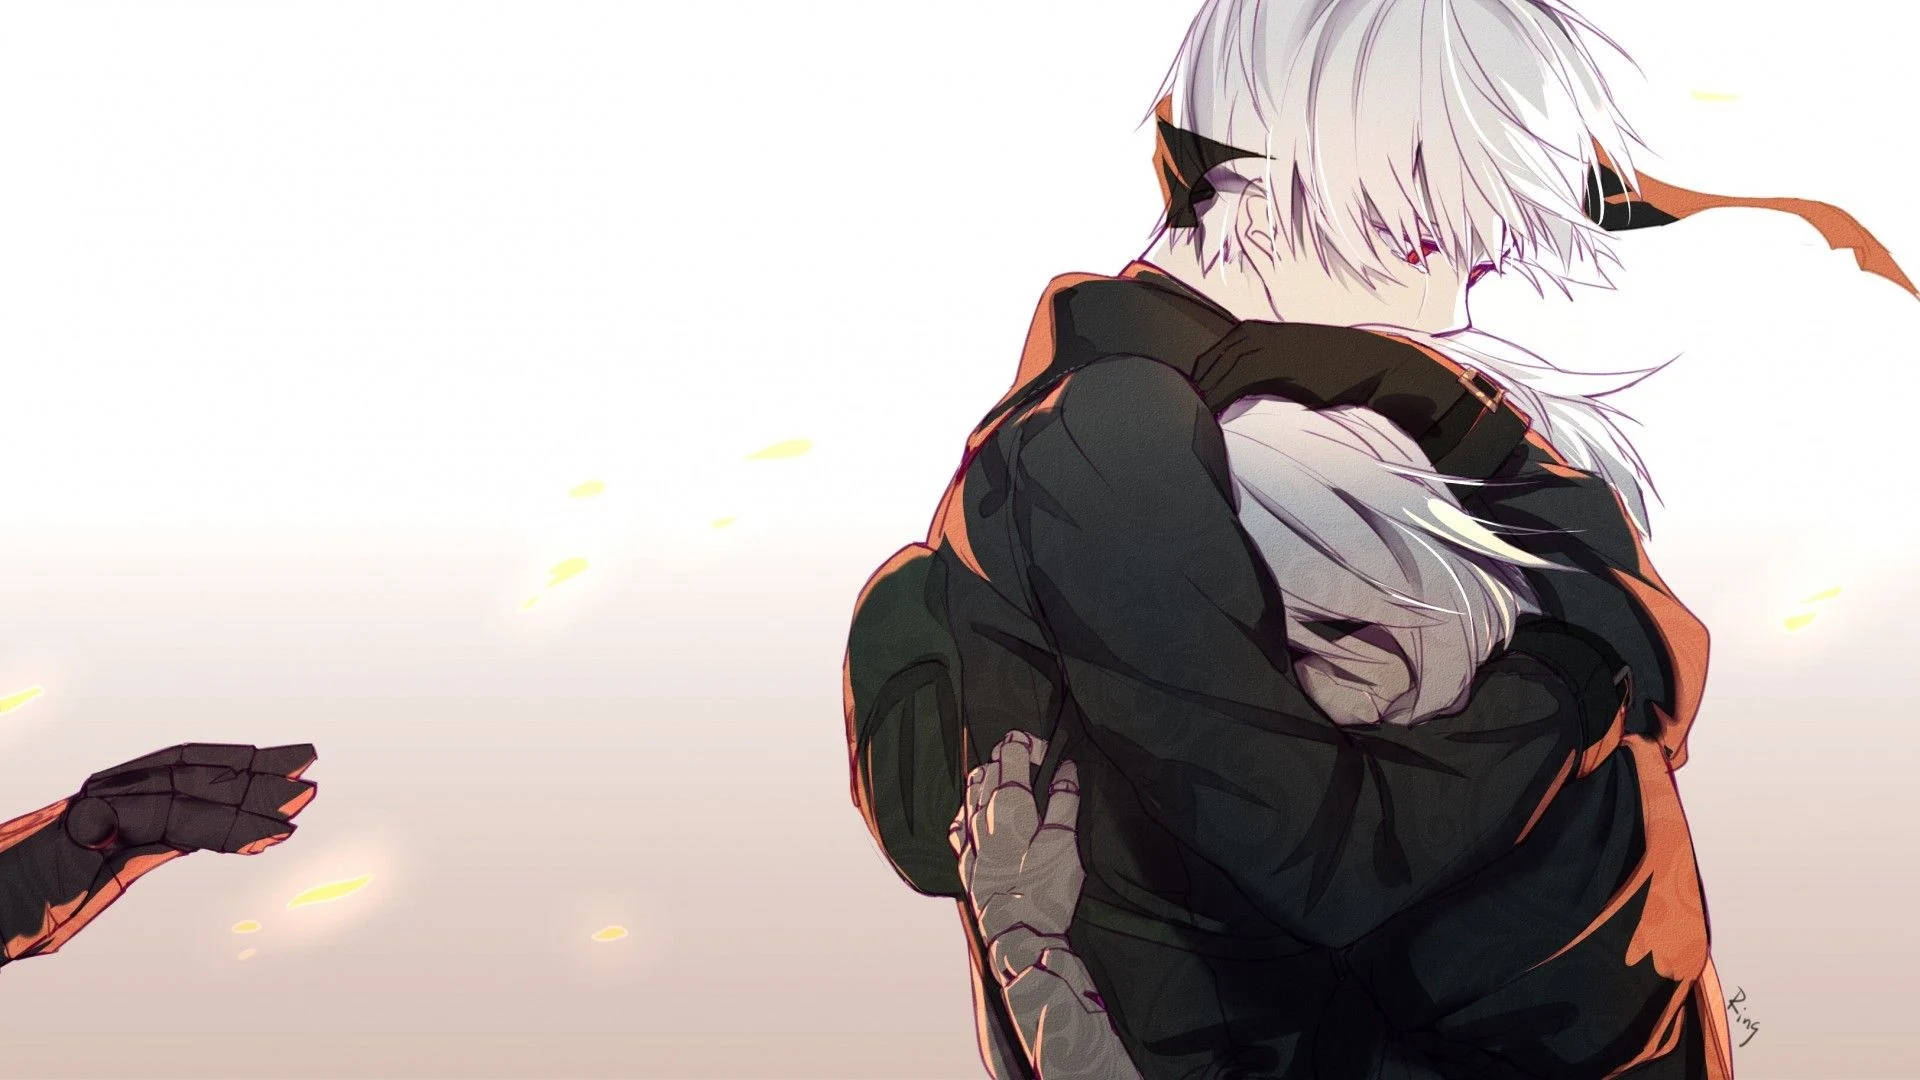 Anime Hug Couple With White Hair Background